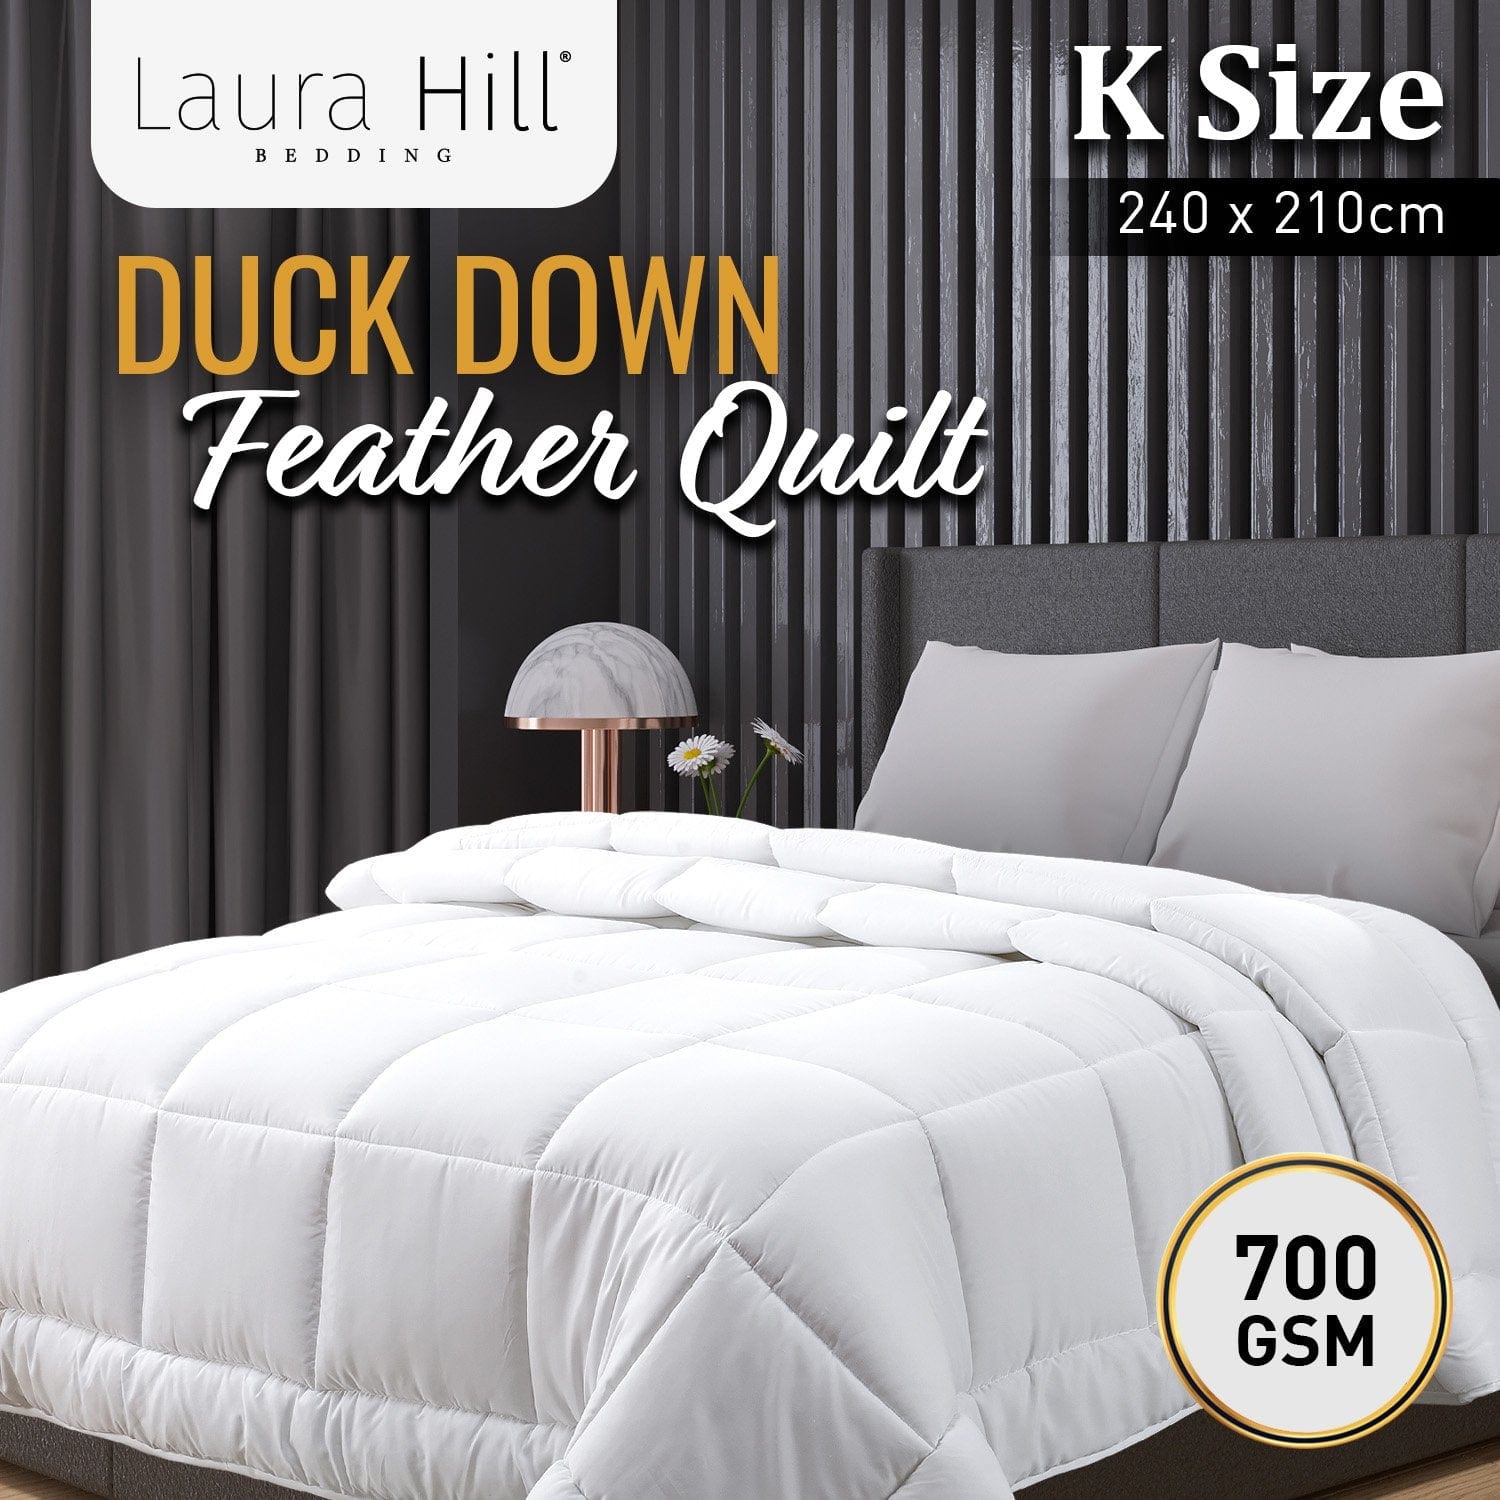 700GSM Duck Down Feather Quilt Duvet Doona - King